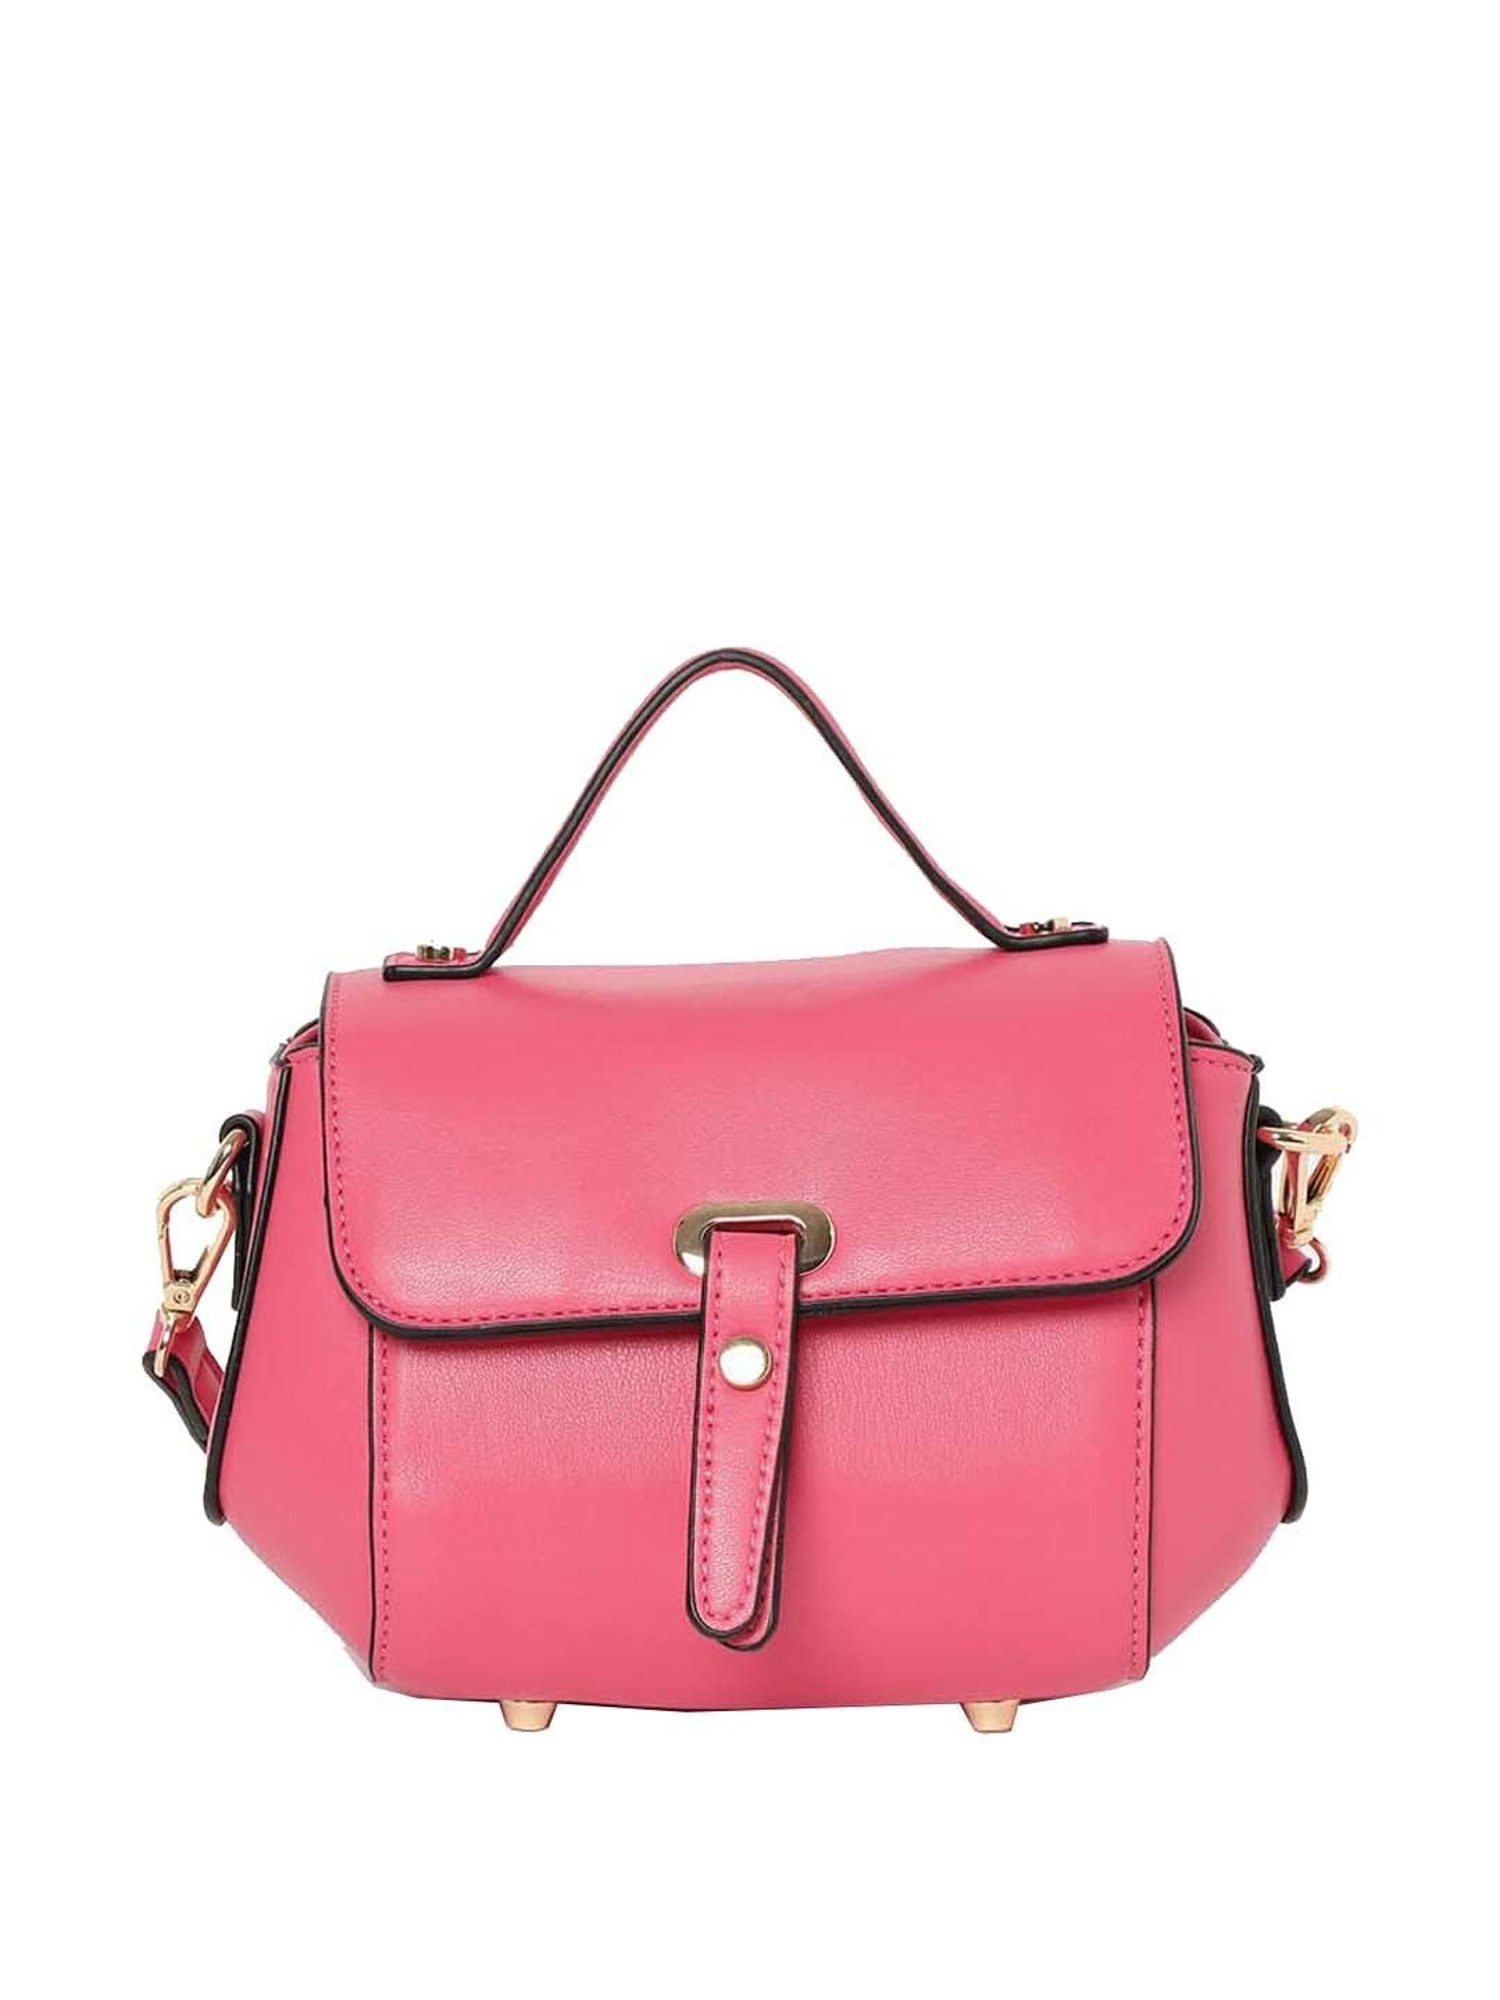 Kate Spade Wellesley Small Camryn Hot Pink Leather Satchel Purse Handbag |  eBay